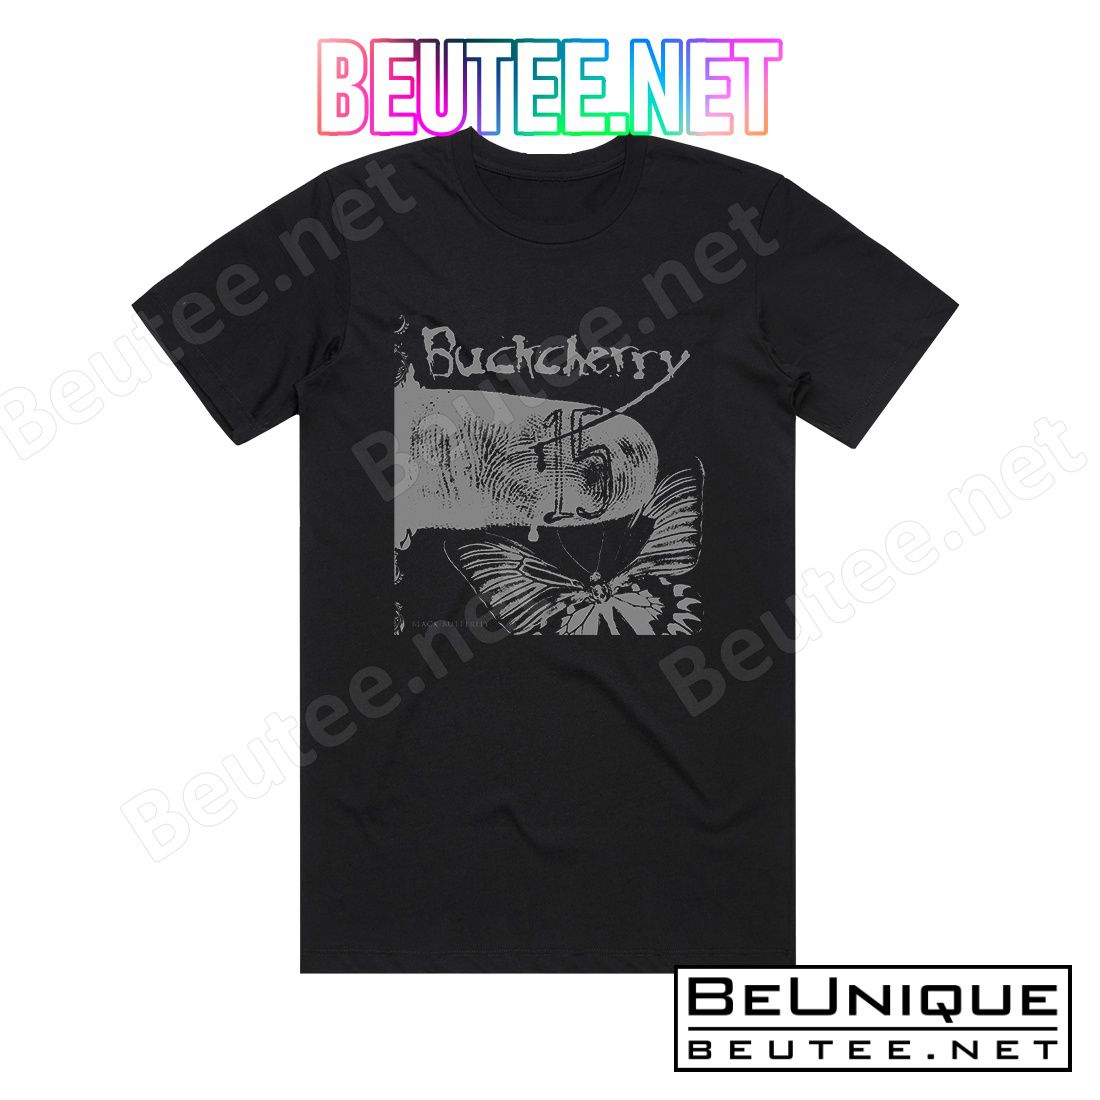 Buckcherry 15 Black Butterfly Album Cover T-Shirt